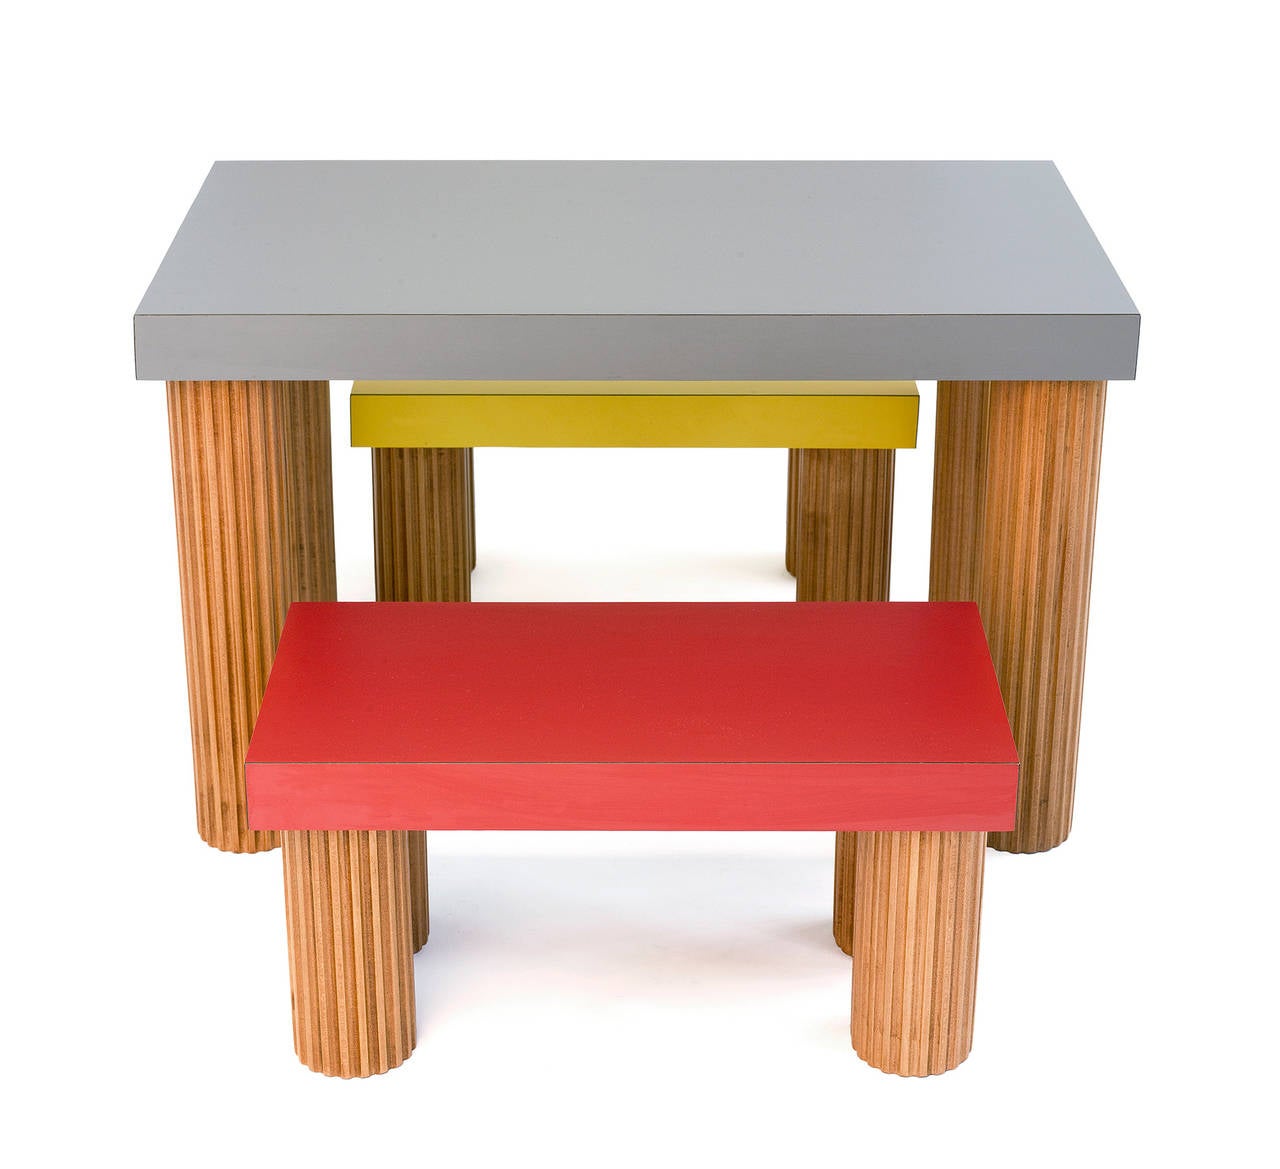 Jolly corner table set
Matthew Sullivan/AQQ Design,
Los Angeles, 2015.
Lacquered maple, laminate top.